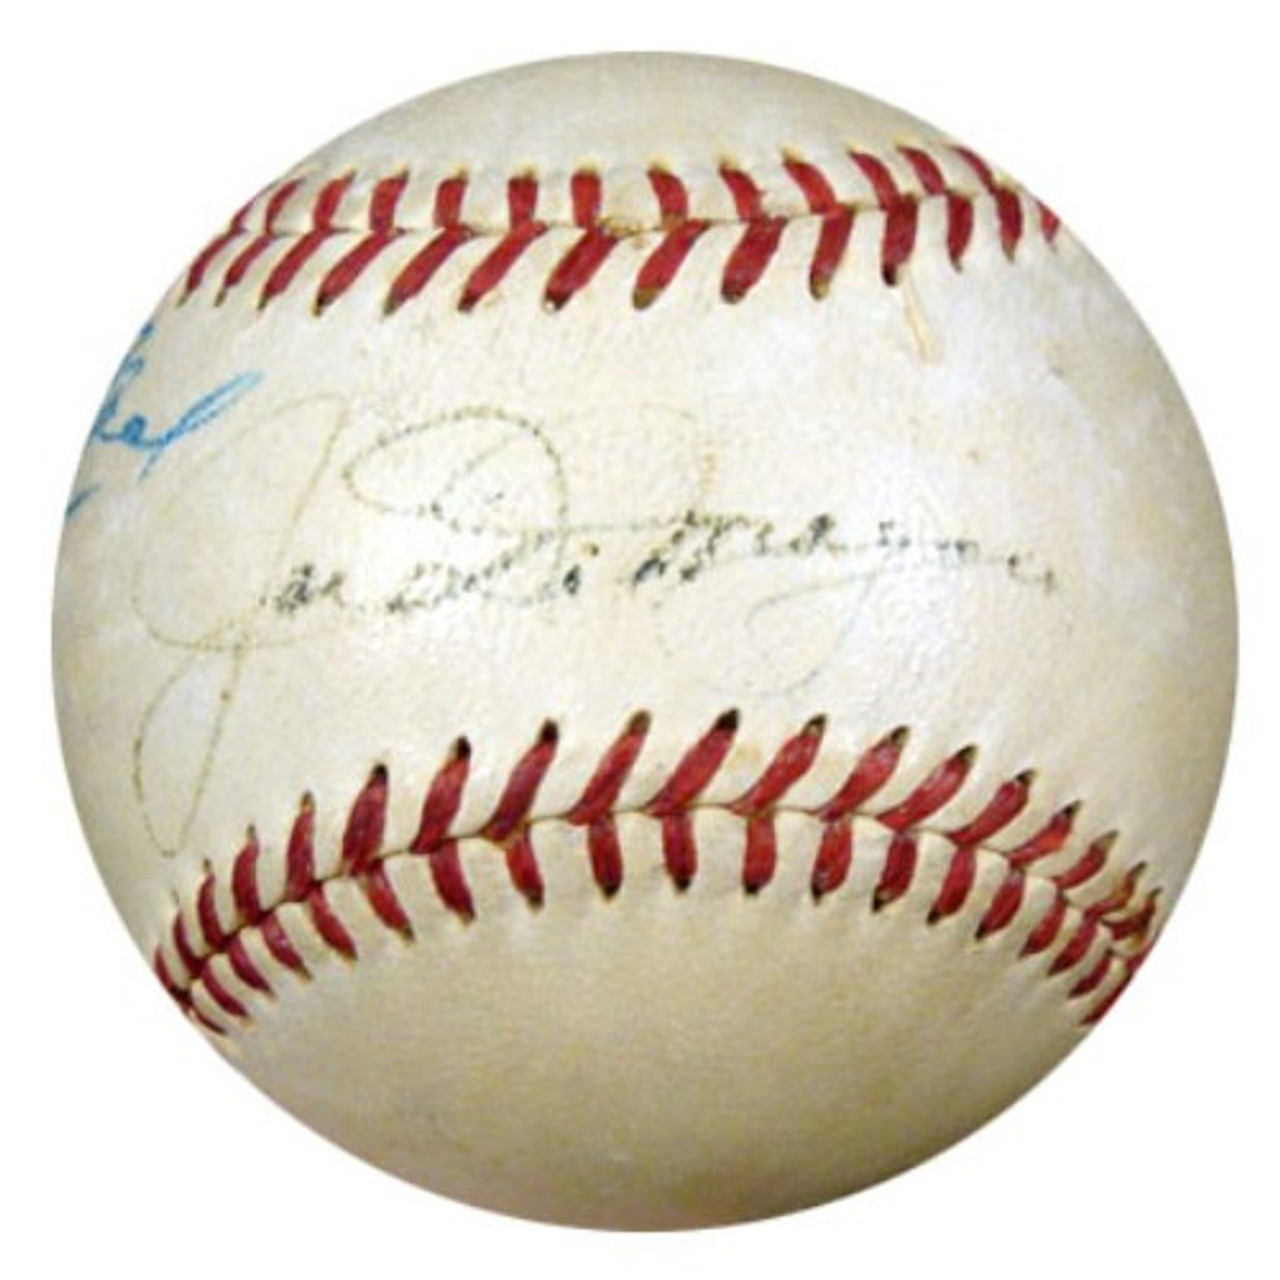 At Auction: Vintage NY Yankees all star baseball cards